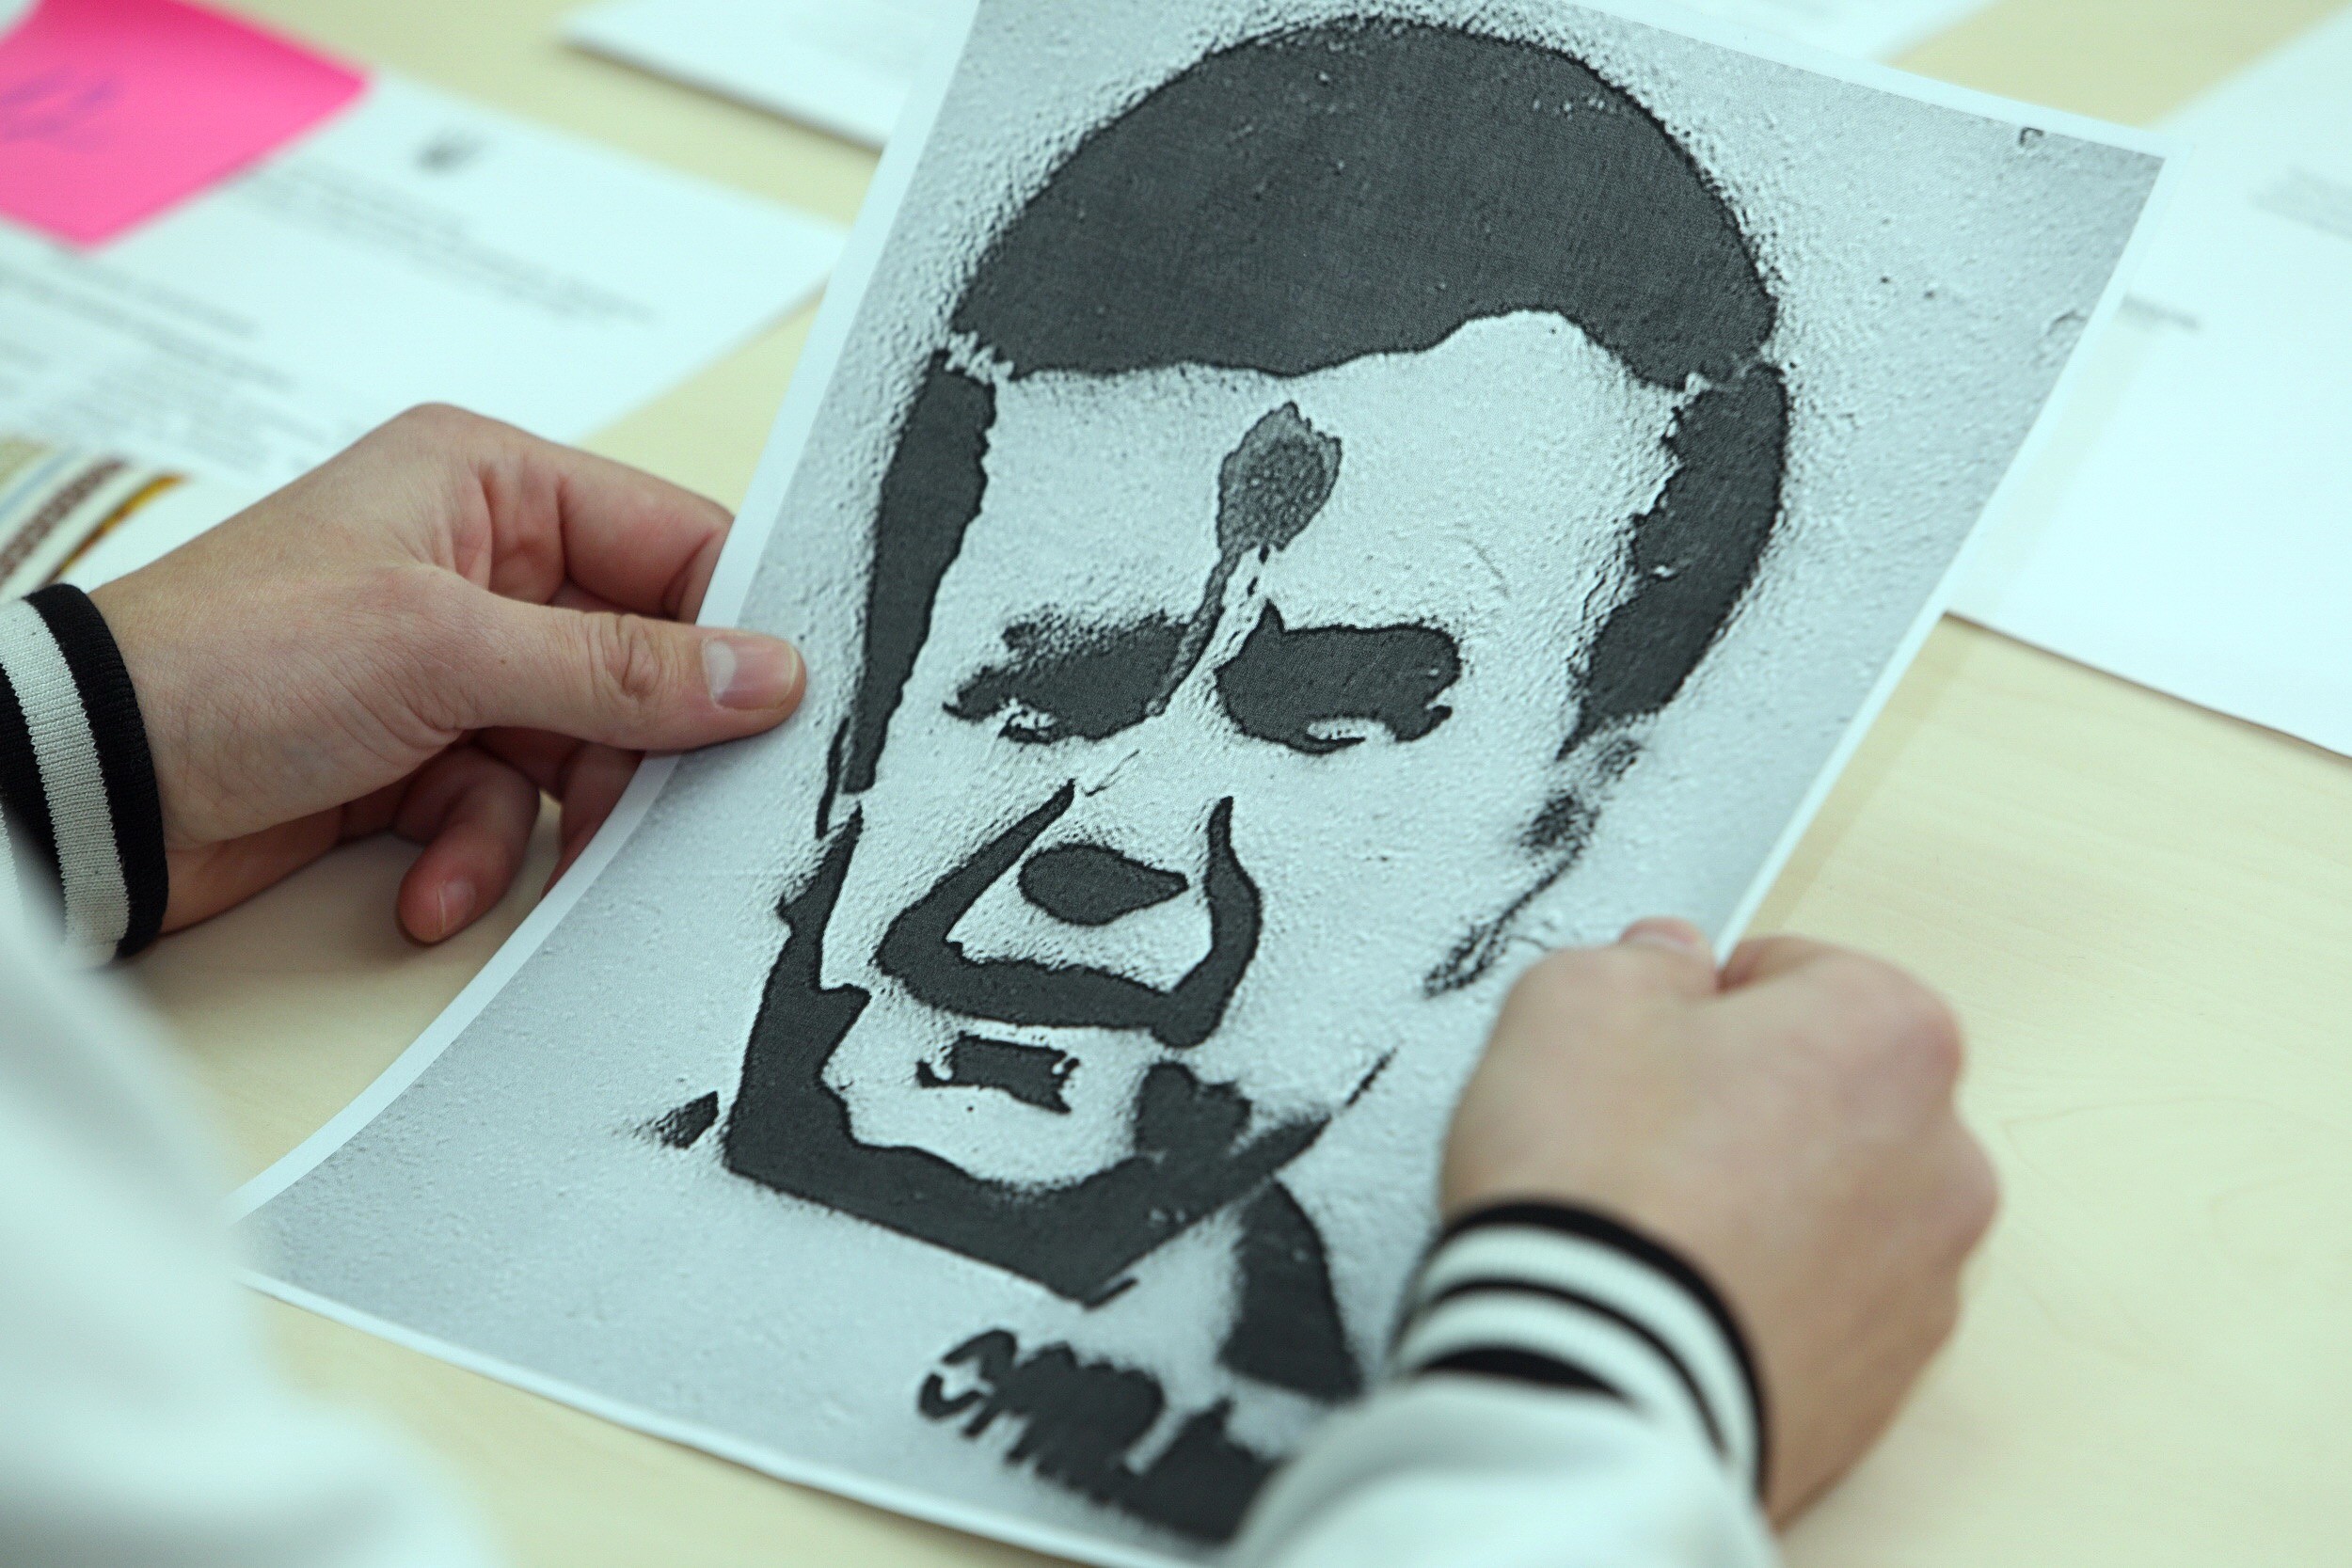 Volodymyr Nykonenko shows an image they drew with stencils back in 2011. 